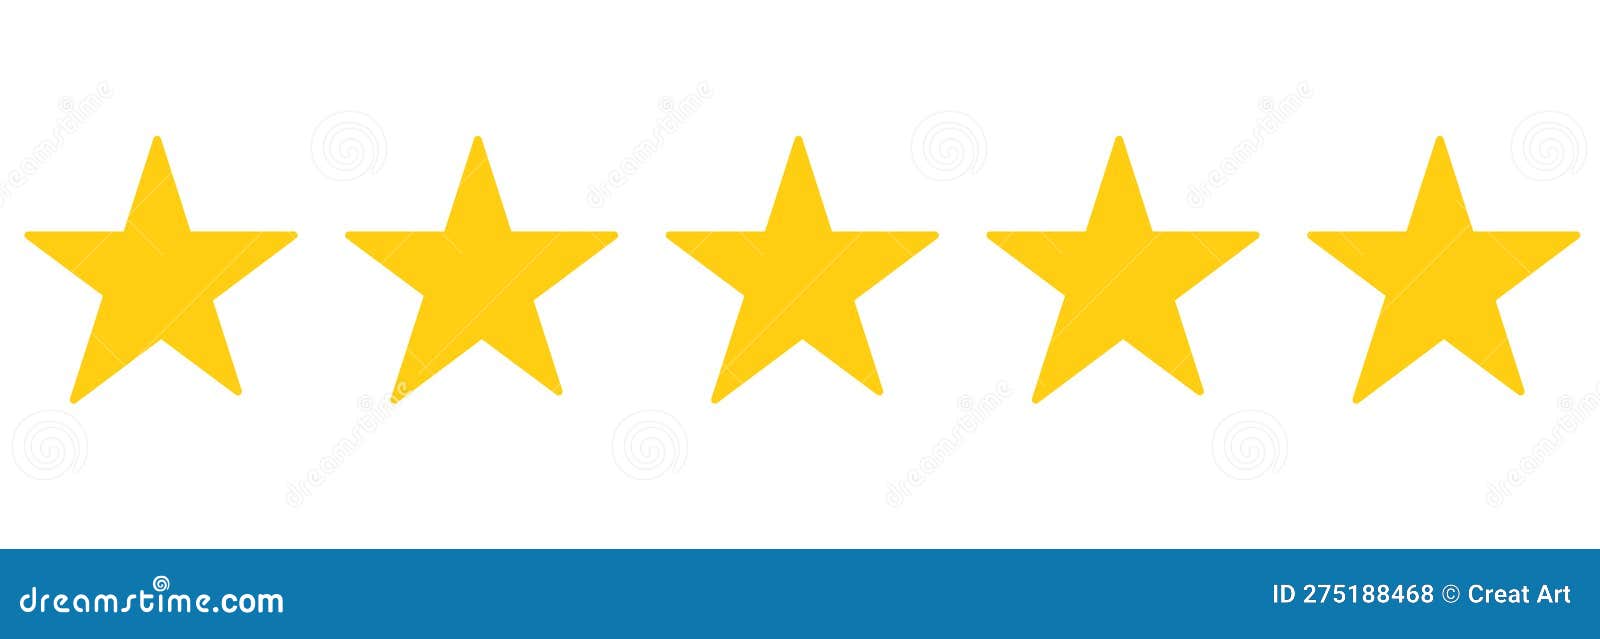 product rating fivestar banner